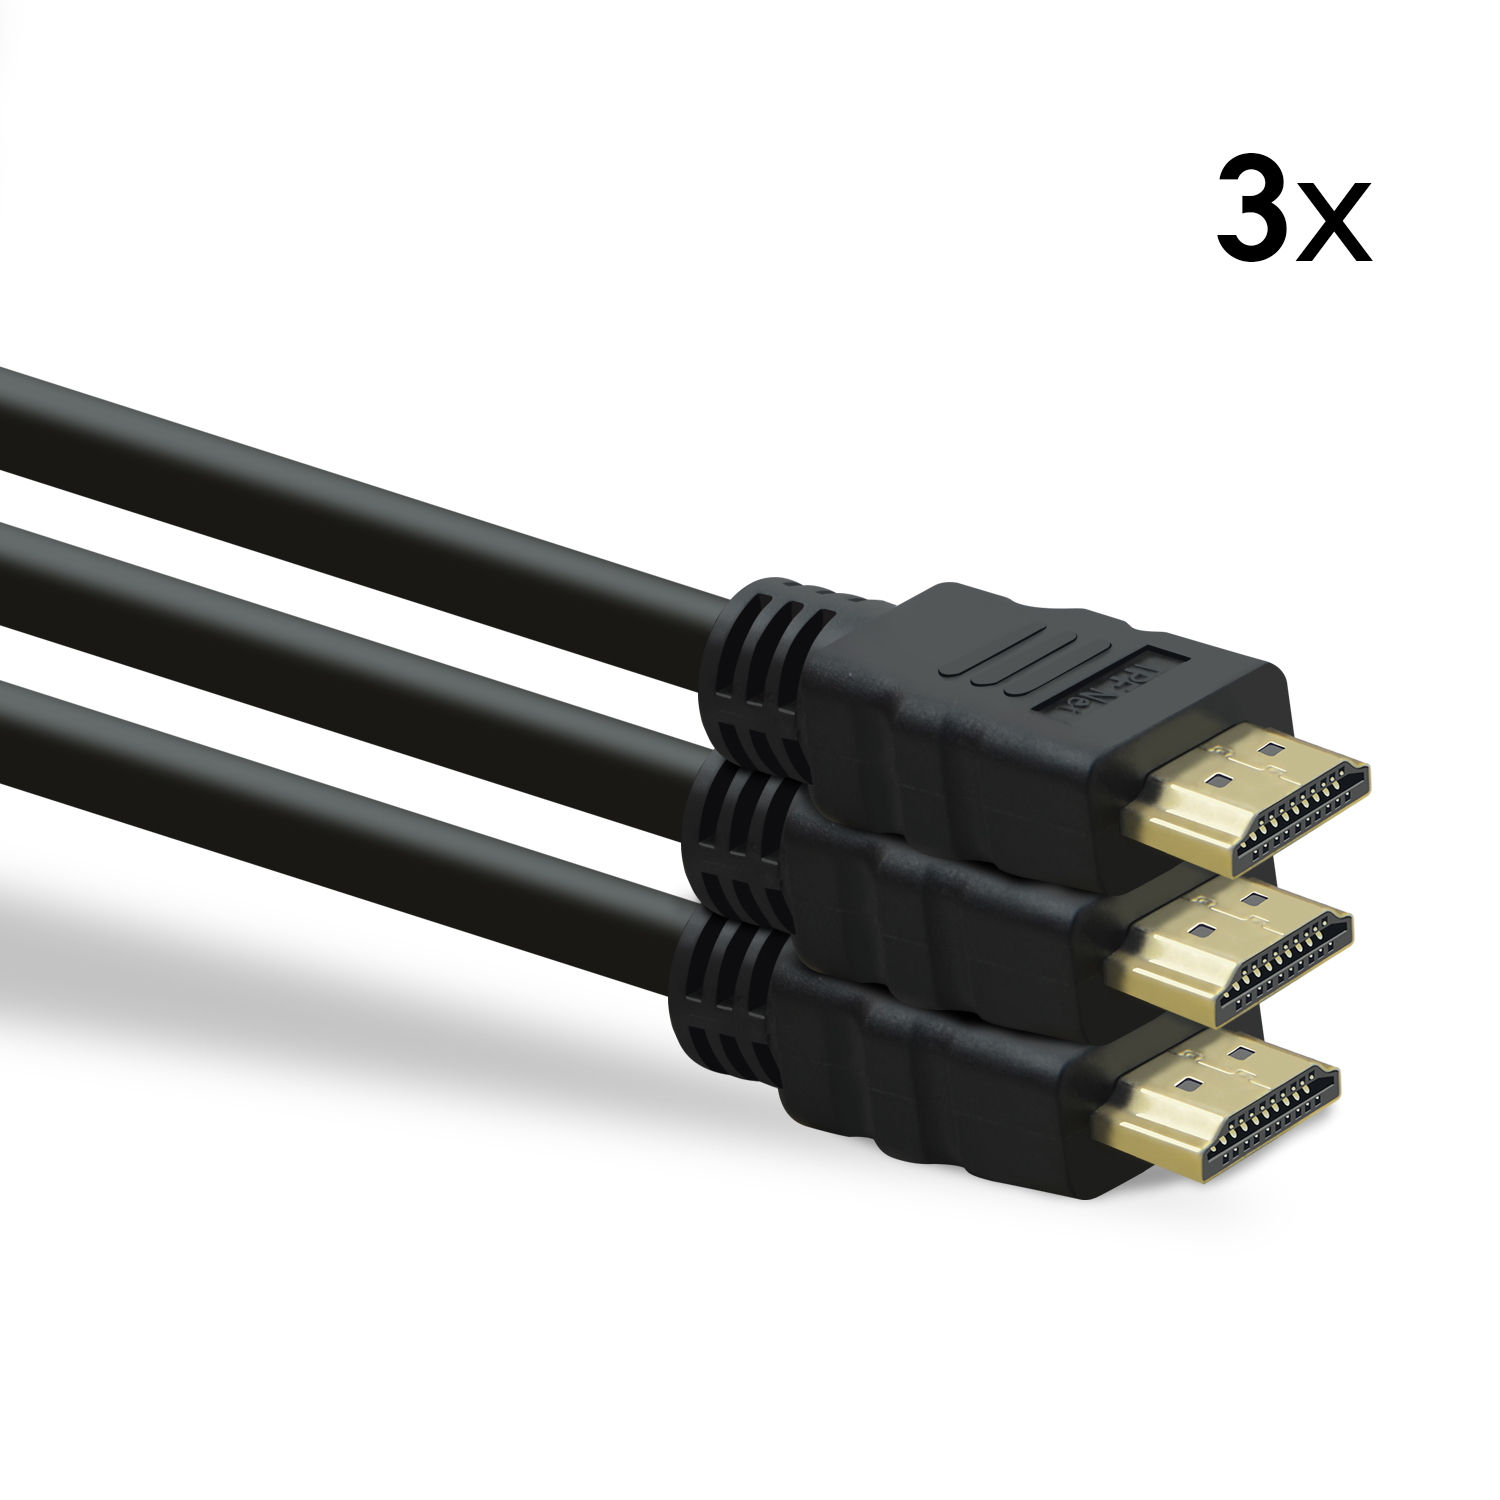 HDMI-Kabel schwarz, 3er HDMI-Kabel mit 1,5m HD, Pack 8K, Ethernet, TPFNET abwärtskompatibel, Premium Ultra